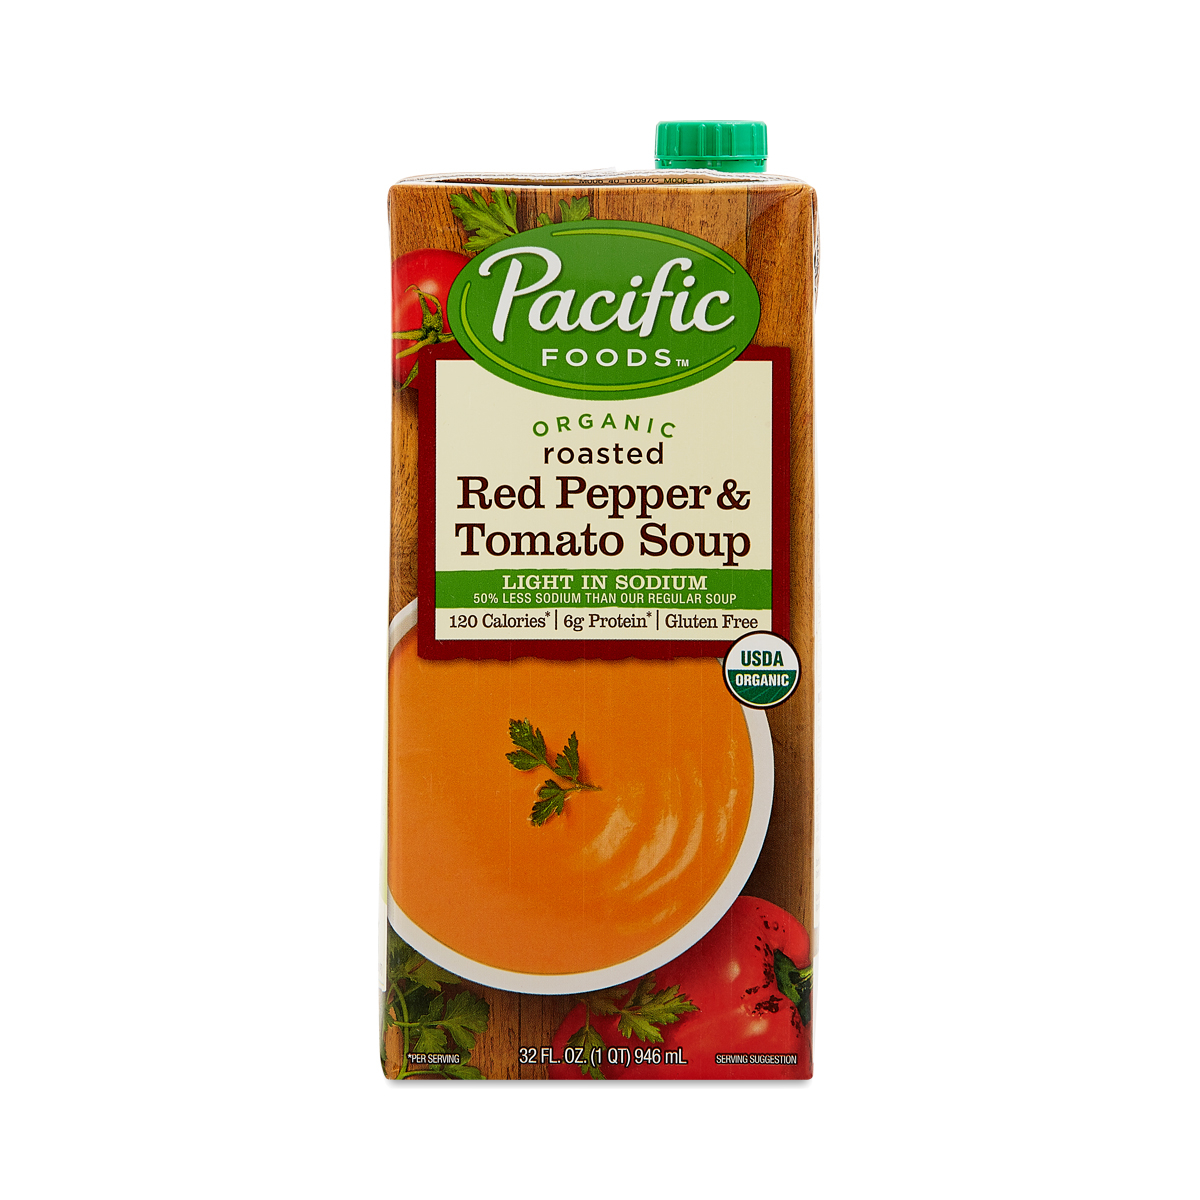 Pacific Foods Organic Light Sodium Roasted Red Pepper & Tomato Soup 32 fl oz carton